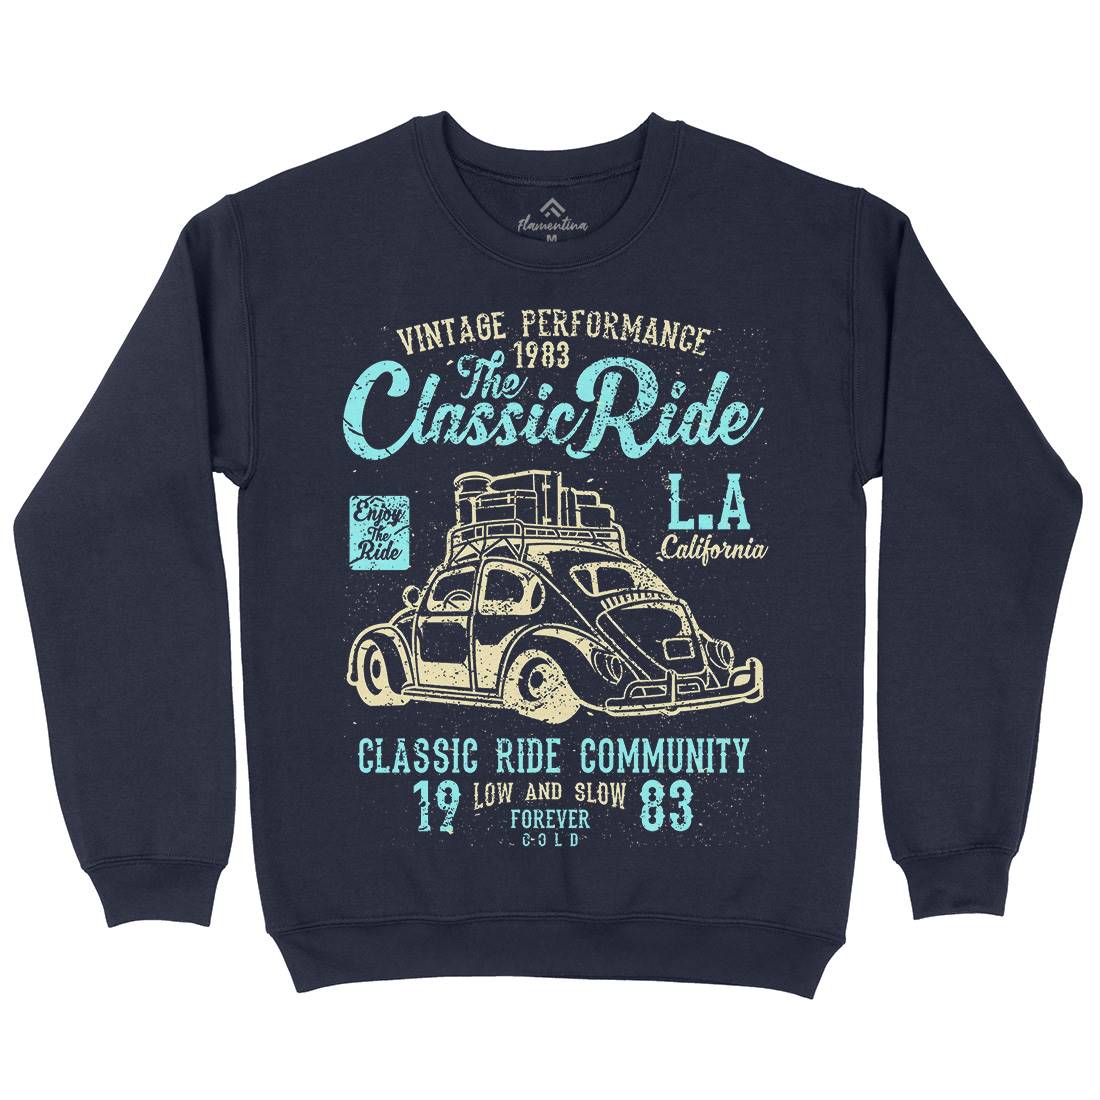 Classic Ride Kids Crew Neck Sweatshirt Cars A171